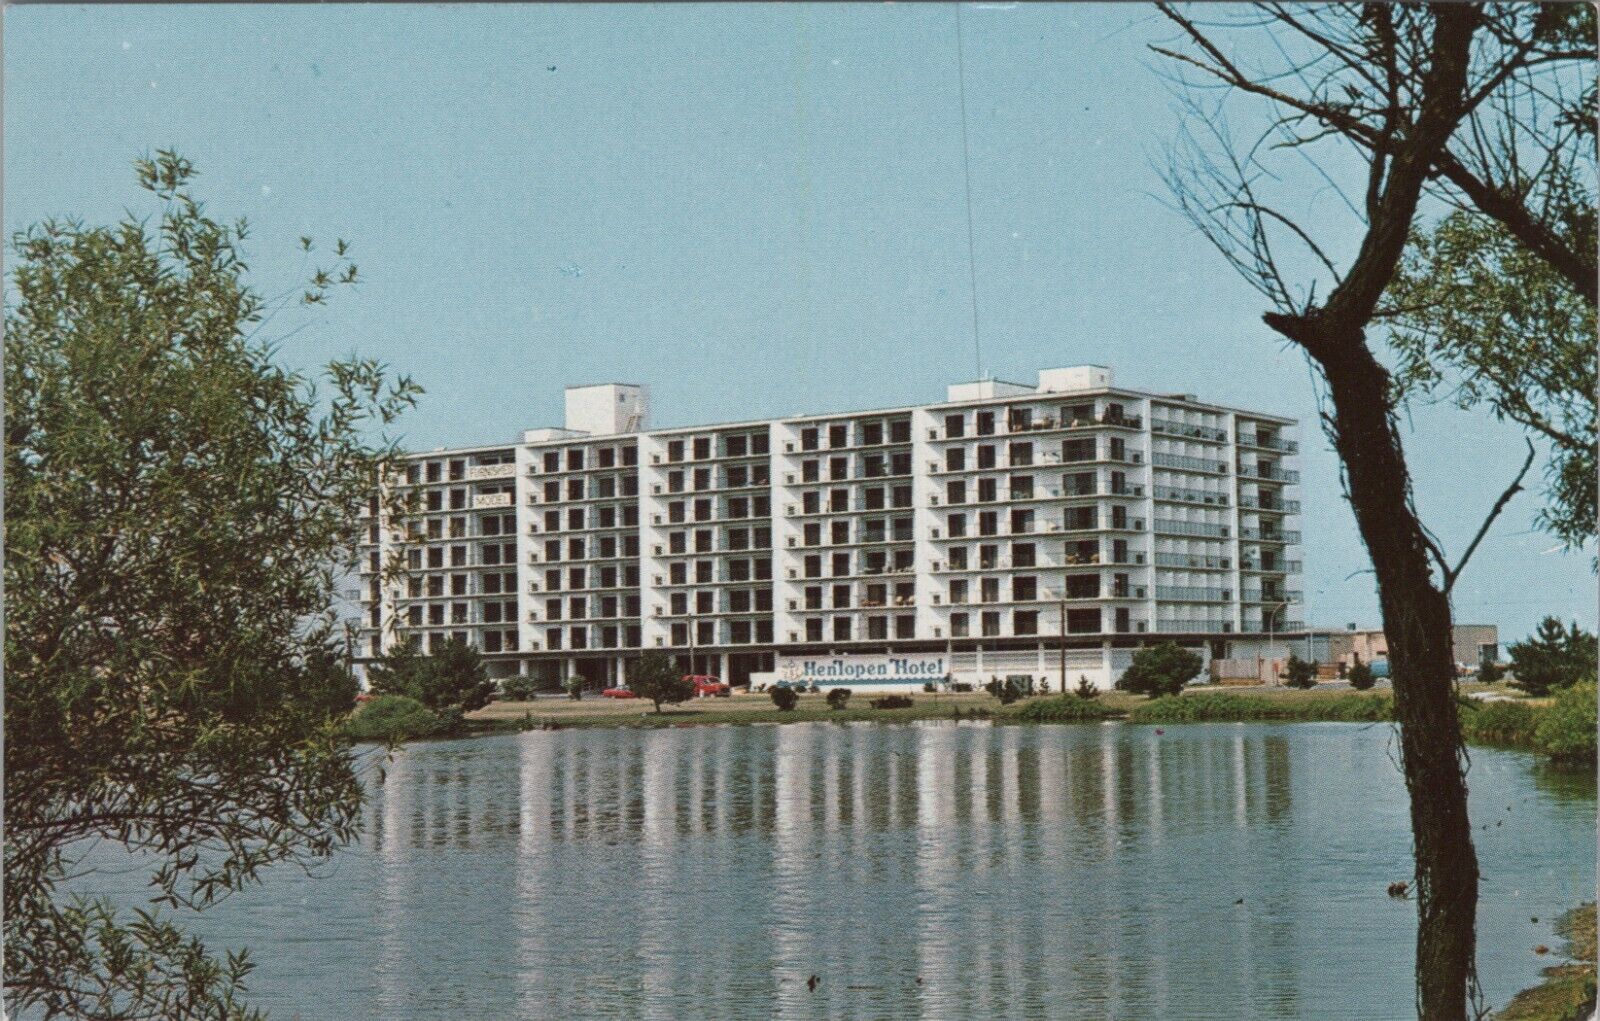 Henlopen Hotel, Rehoboth Beach, Delaware c1960-70s Postcard B3768.4 MR ALE P&P